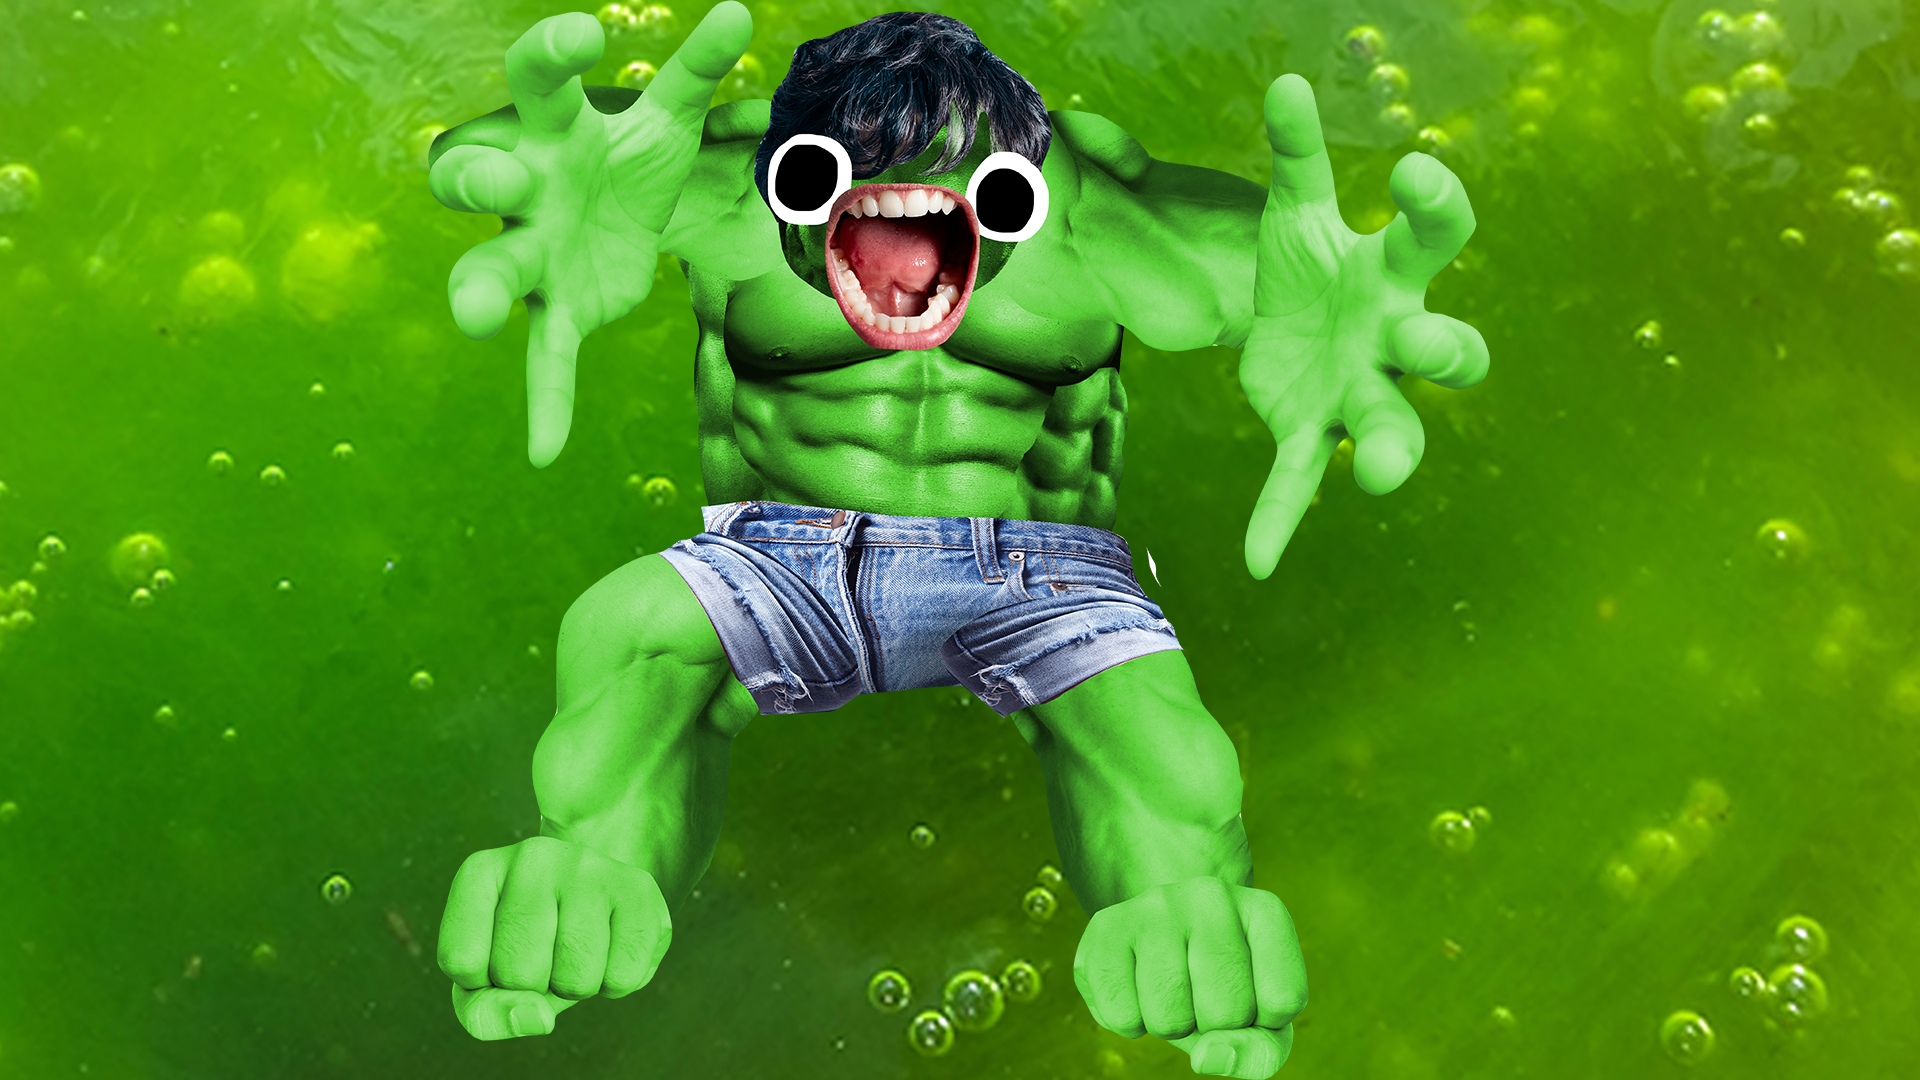 The hulk on slime background